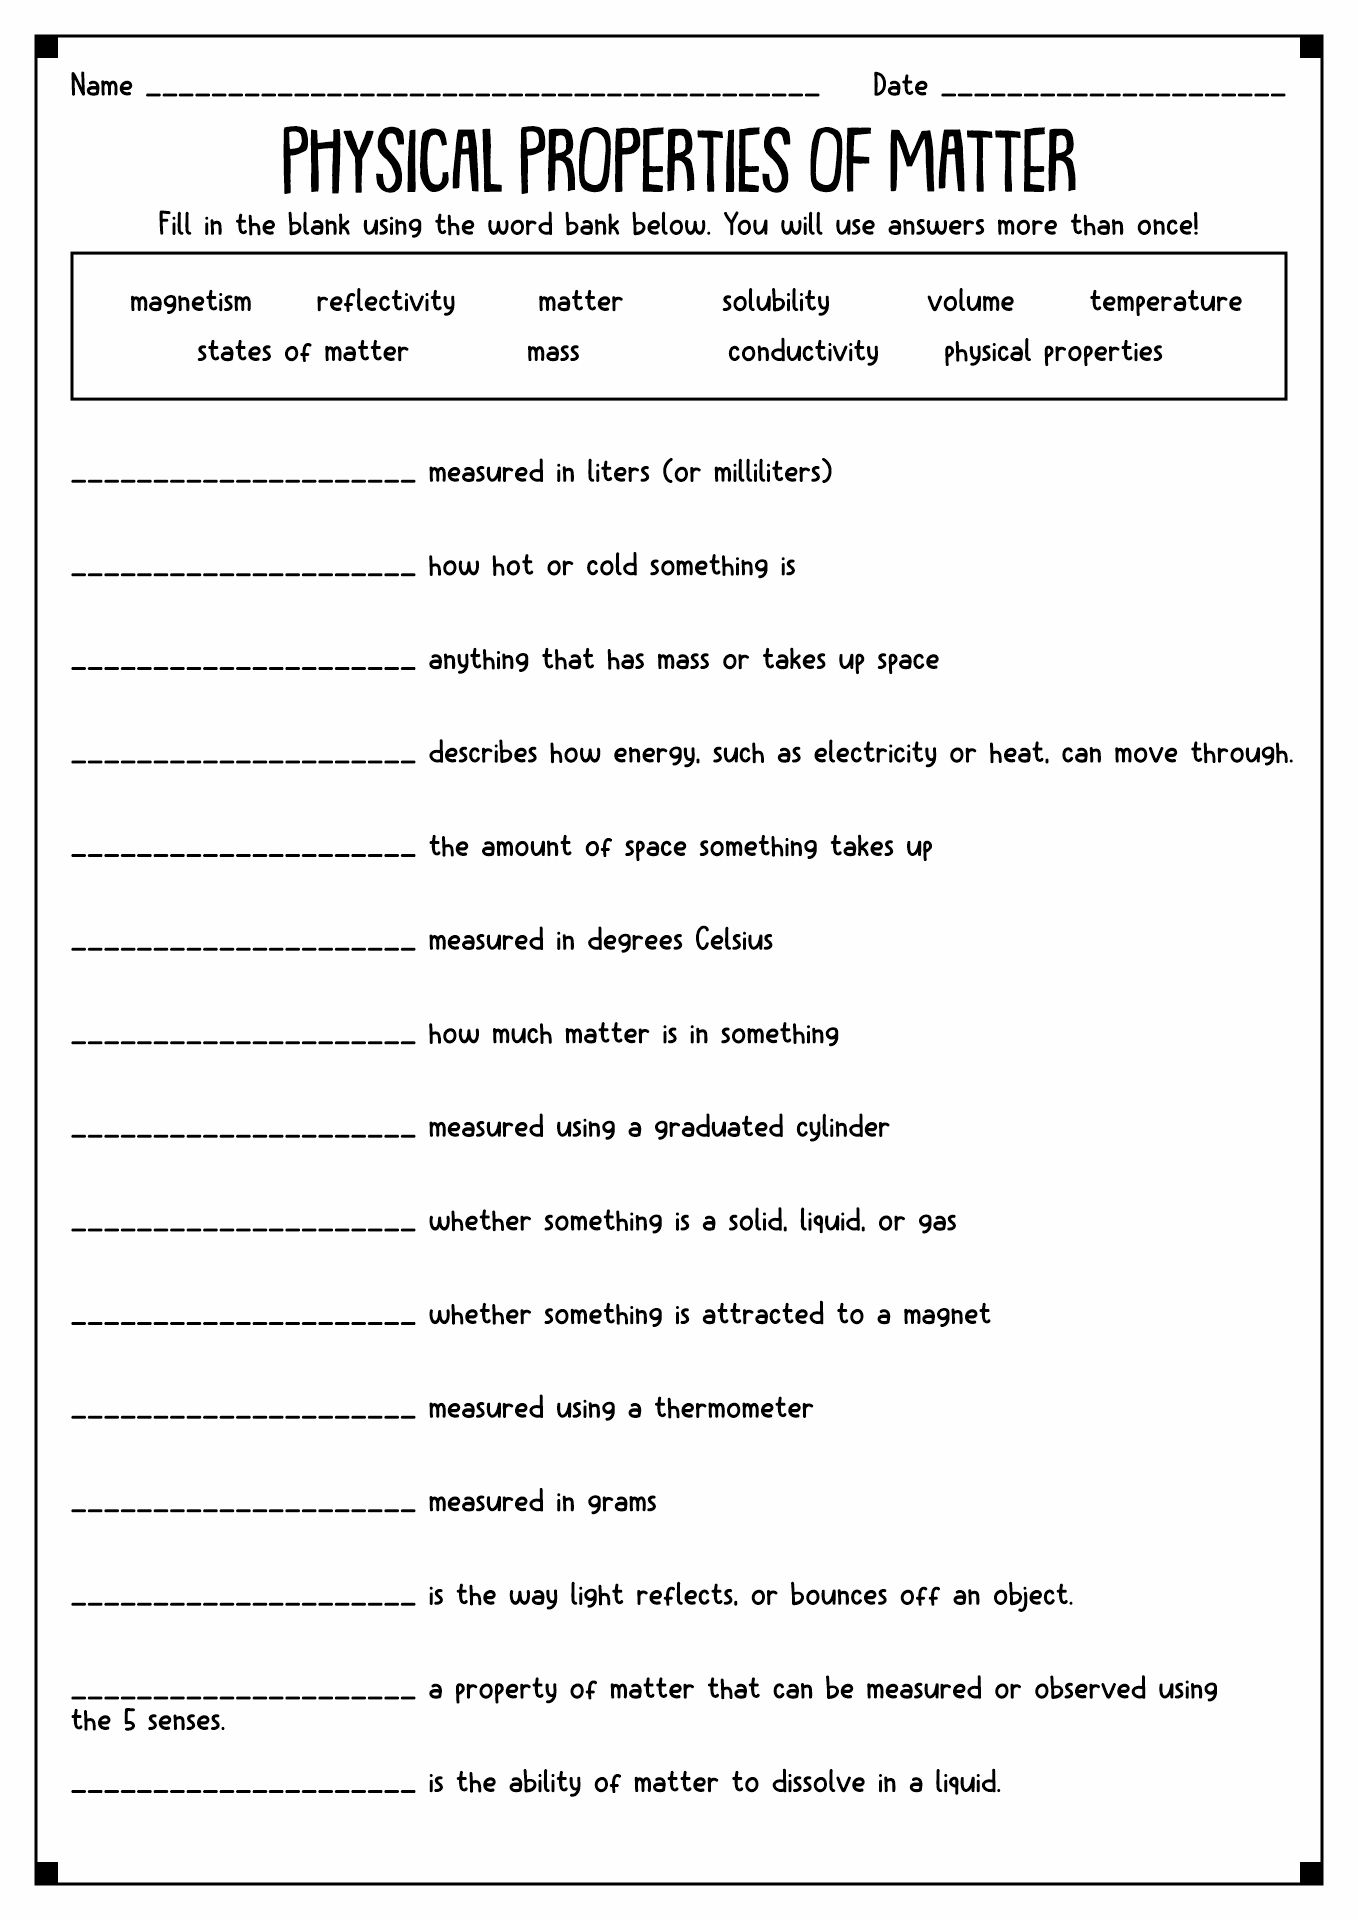 Physical Properties of Matter Worksheet